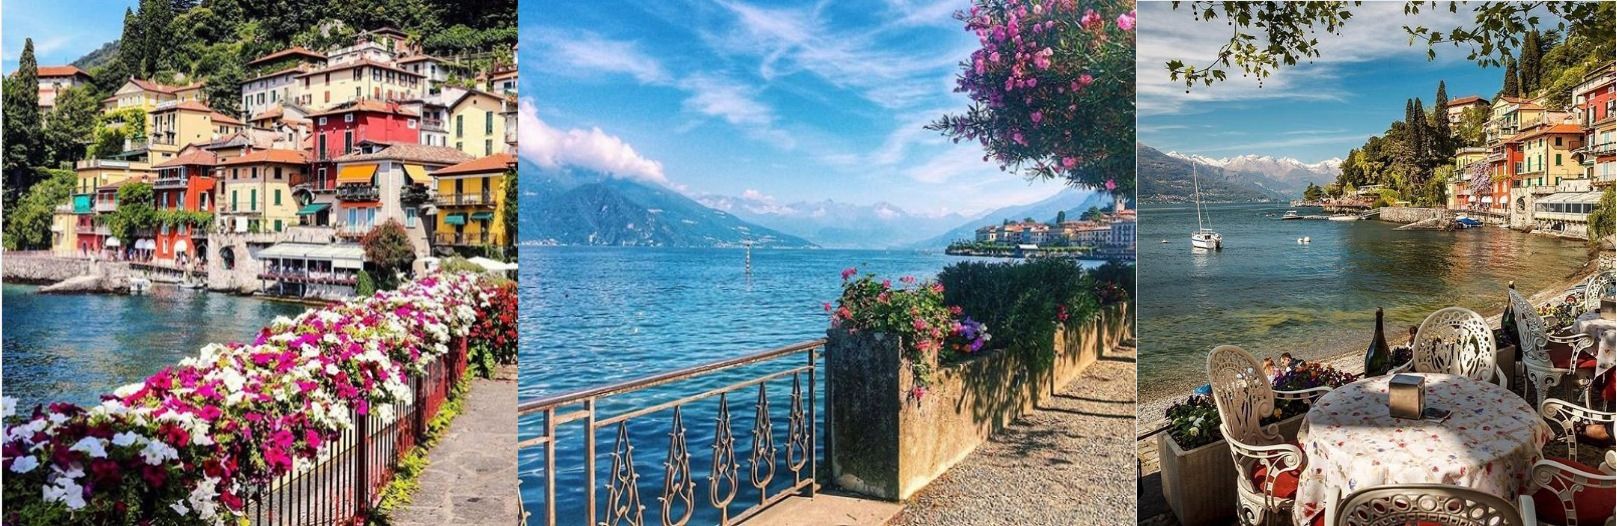 Ranveer and Deepika's wedding destination, Lake Como, Italy